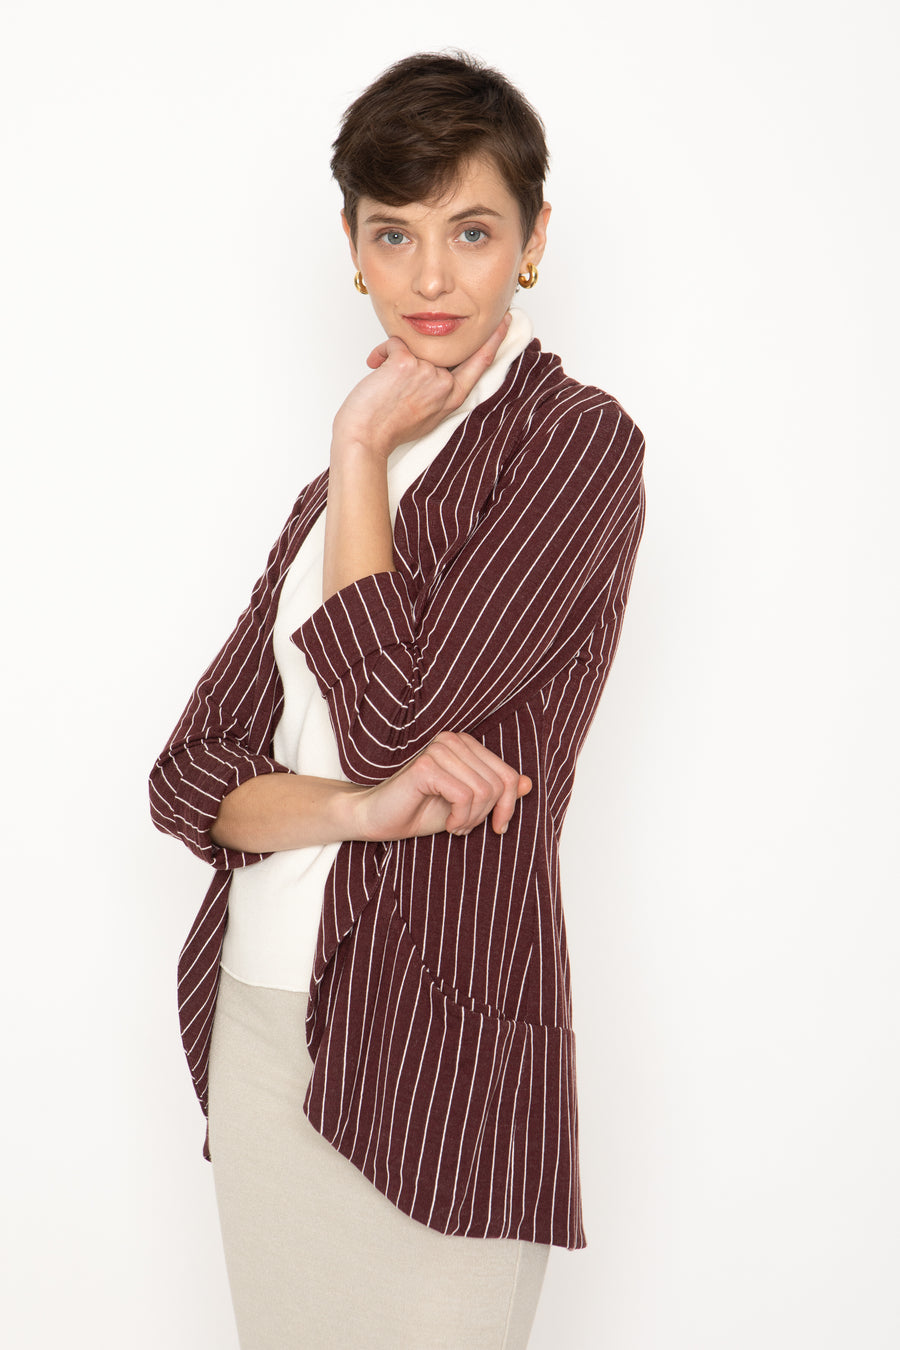 No Srcipt image - Images of 1 of 7 Classic Melanie Shawl Simple Staple Burgundy Striped Workwear Blazer Jacket Stripes Everyday Shawl Front Pockets Best Seller Customer Favorite